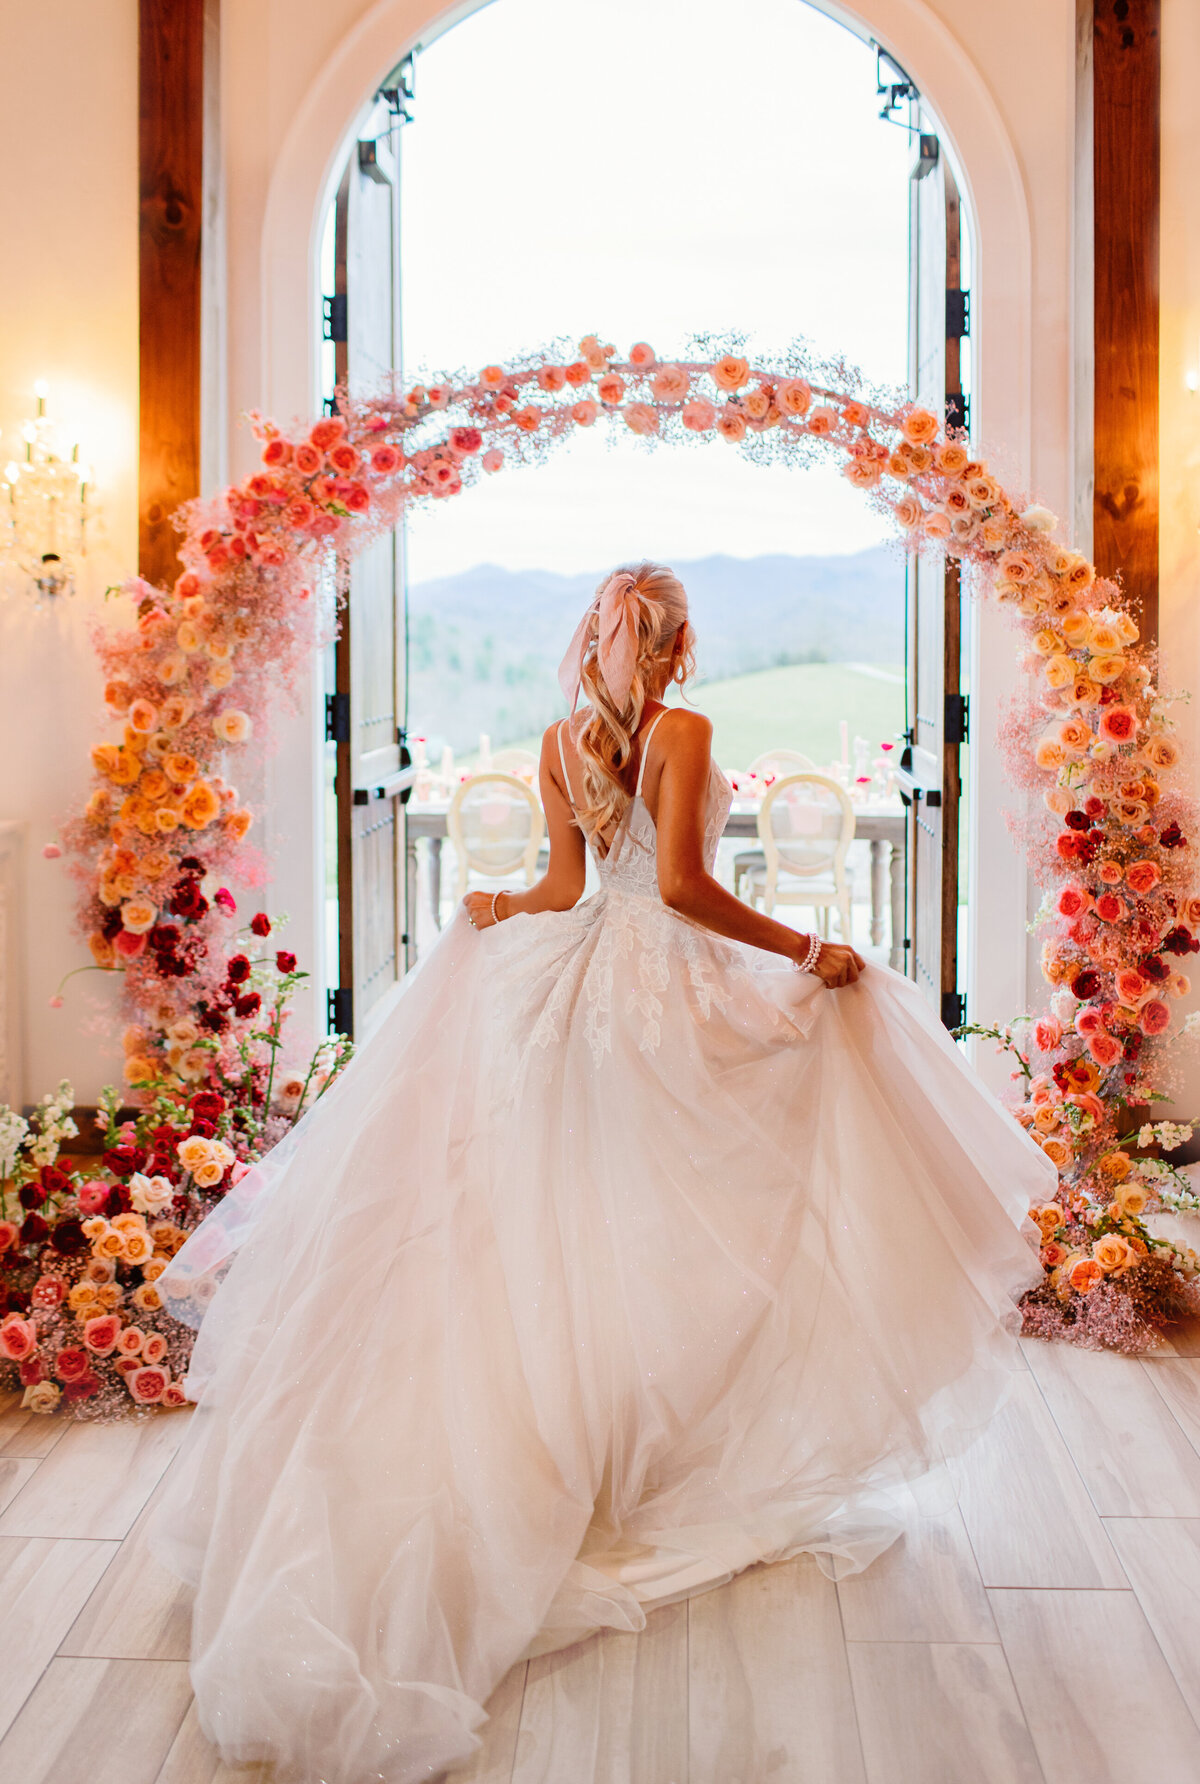 Joy-Unscripted-Wedding-Invitation-Design-Styled-Shoot-Maddie Kay Photography-296